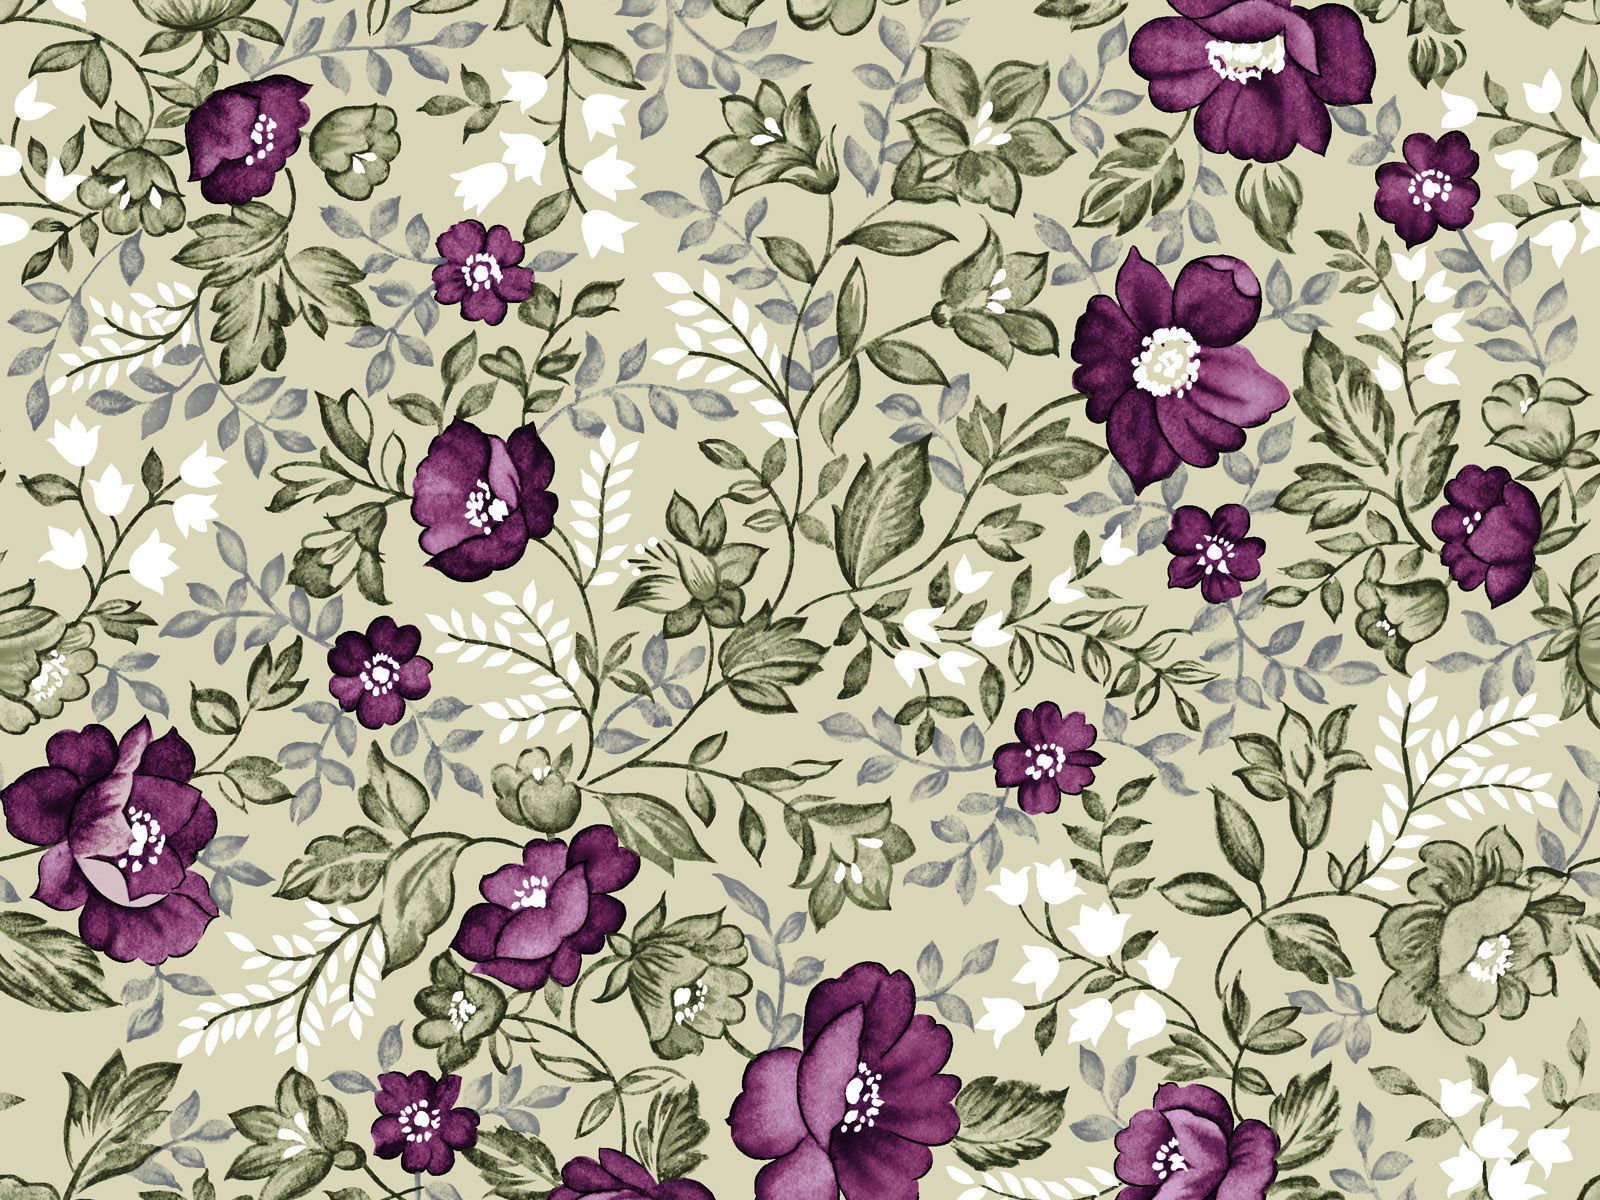 Background wallpaper pattern pattern 1766 - Background patterns ...